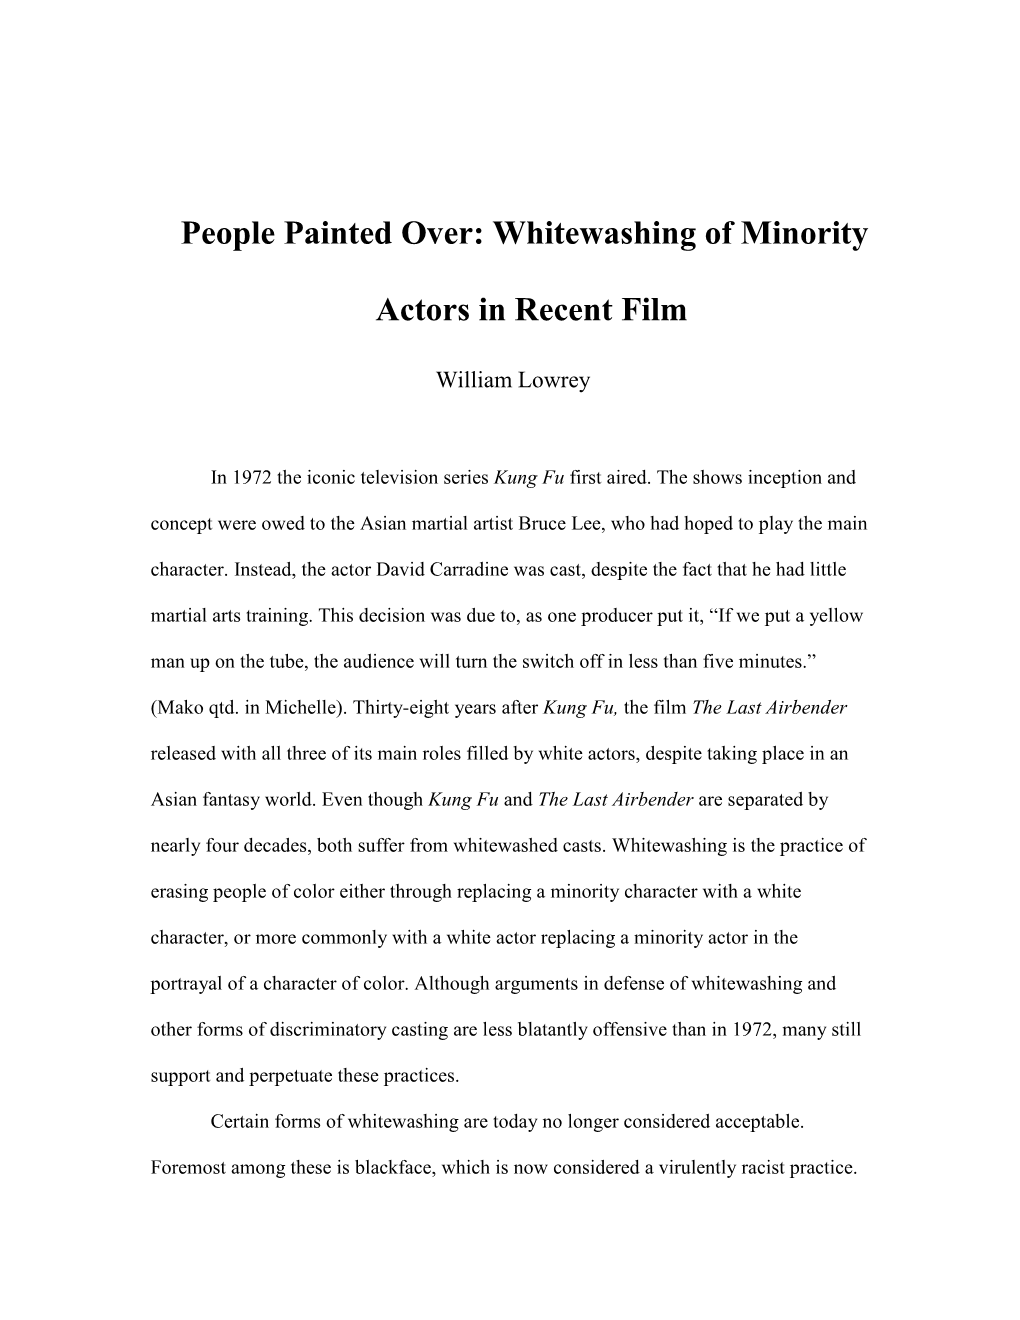 Whitewashing of Minority